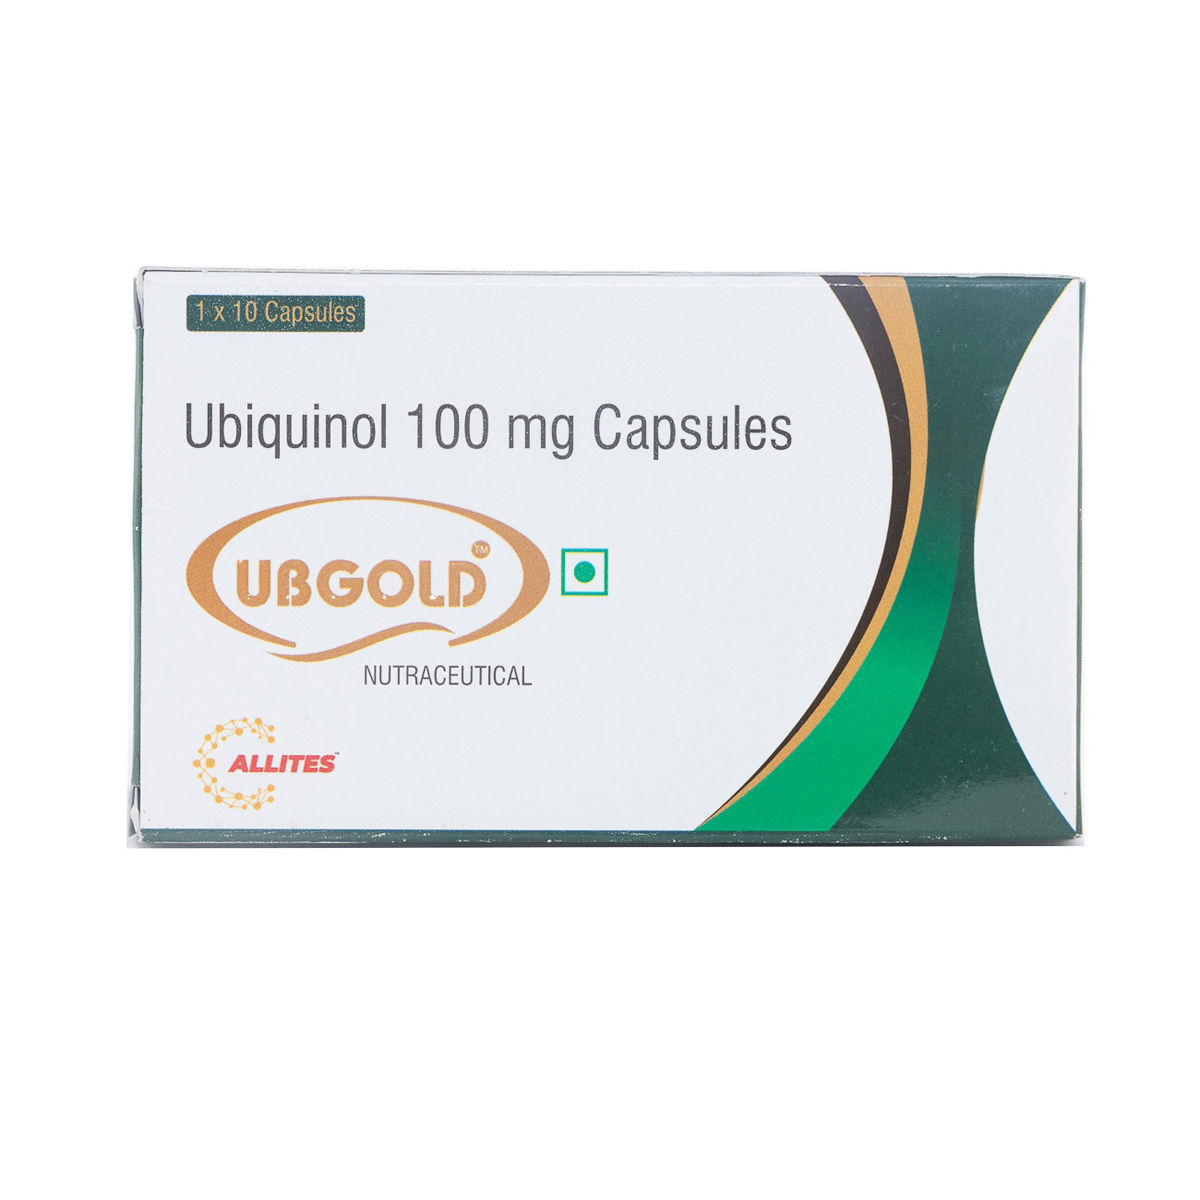 Buy Ubgold Capsule 10's Online